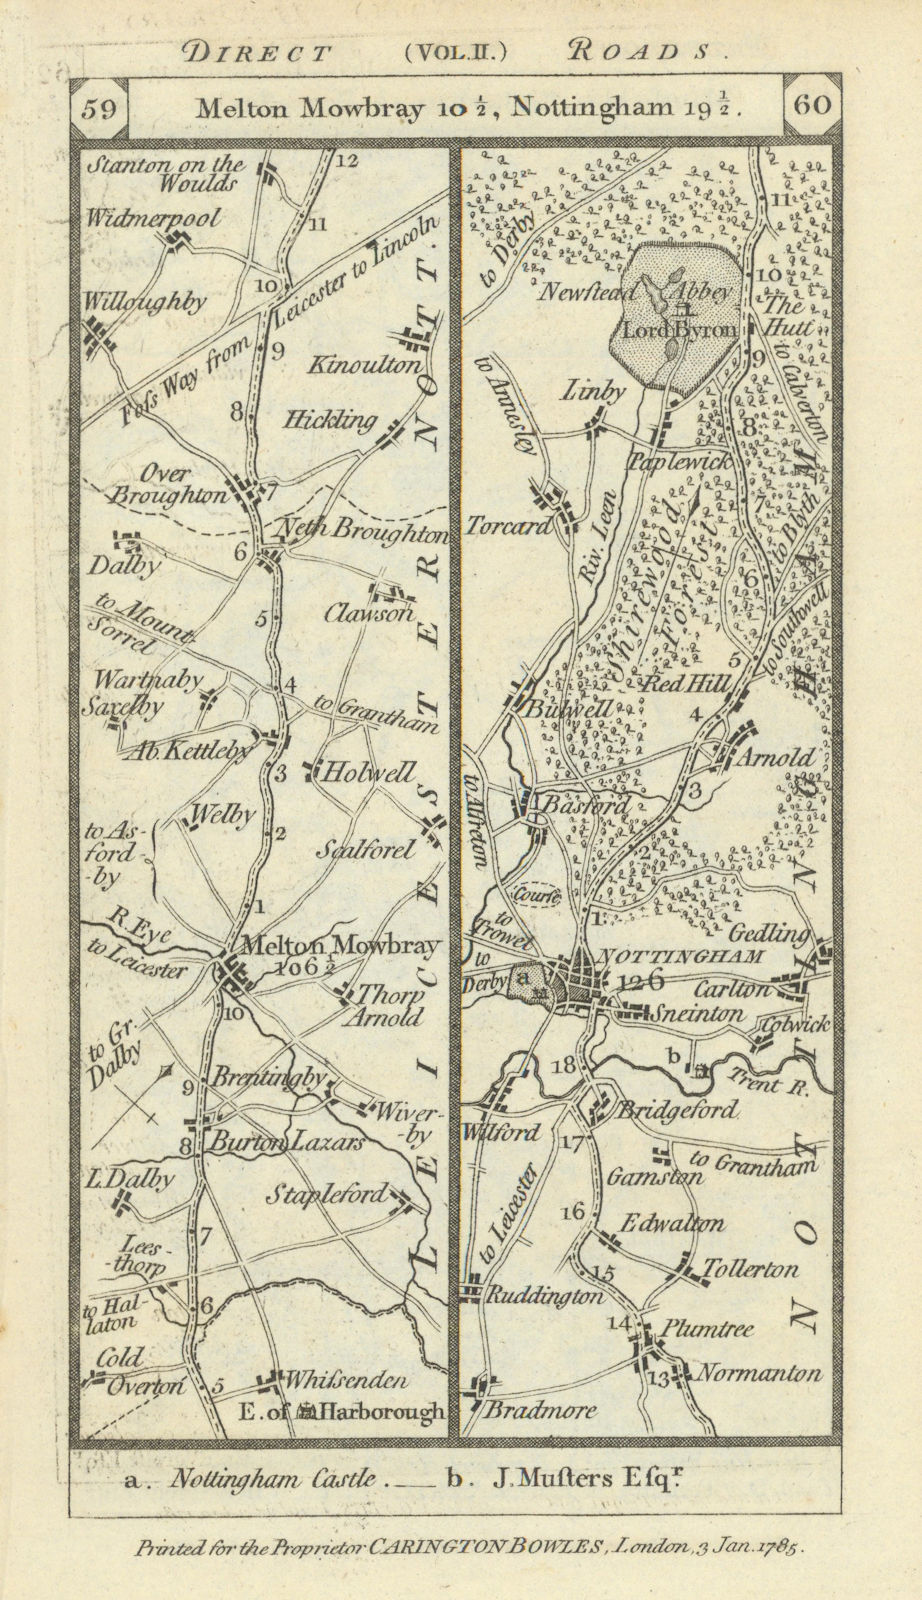 Melton Mowbray-Broughton-Nottingham-Papplewick road strip map PATERSON 1785